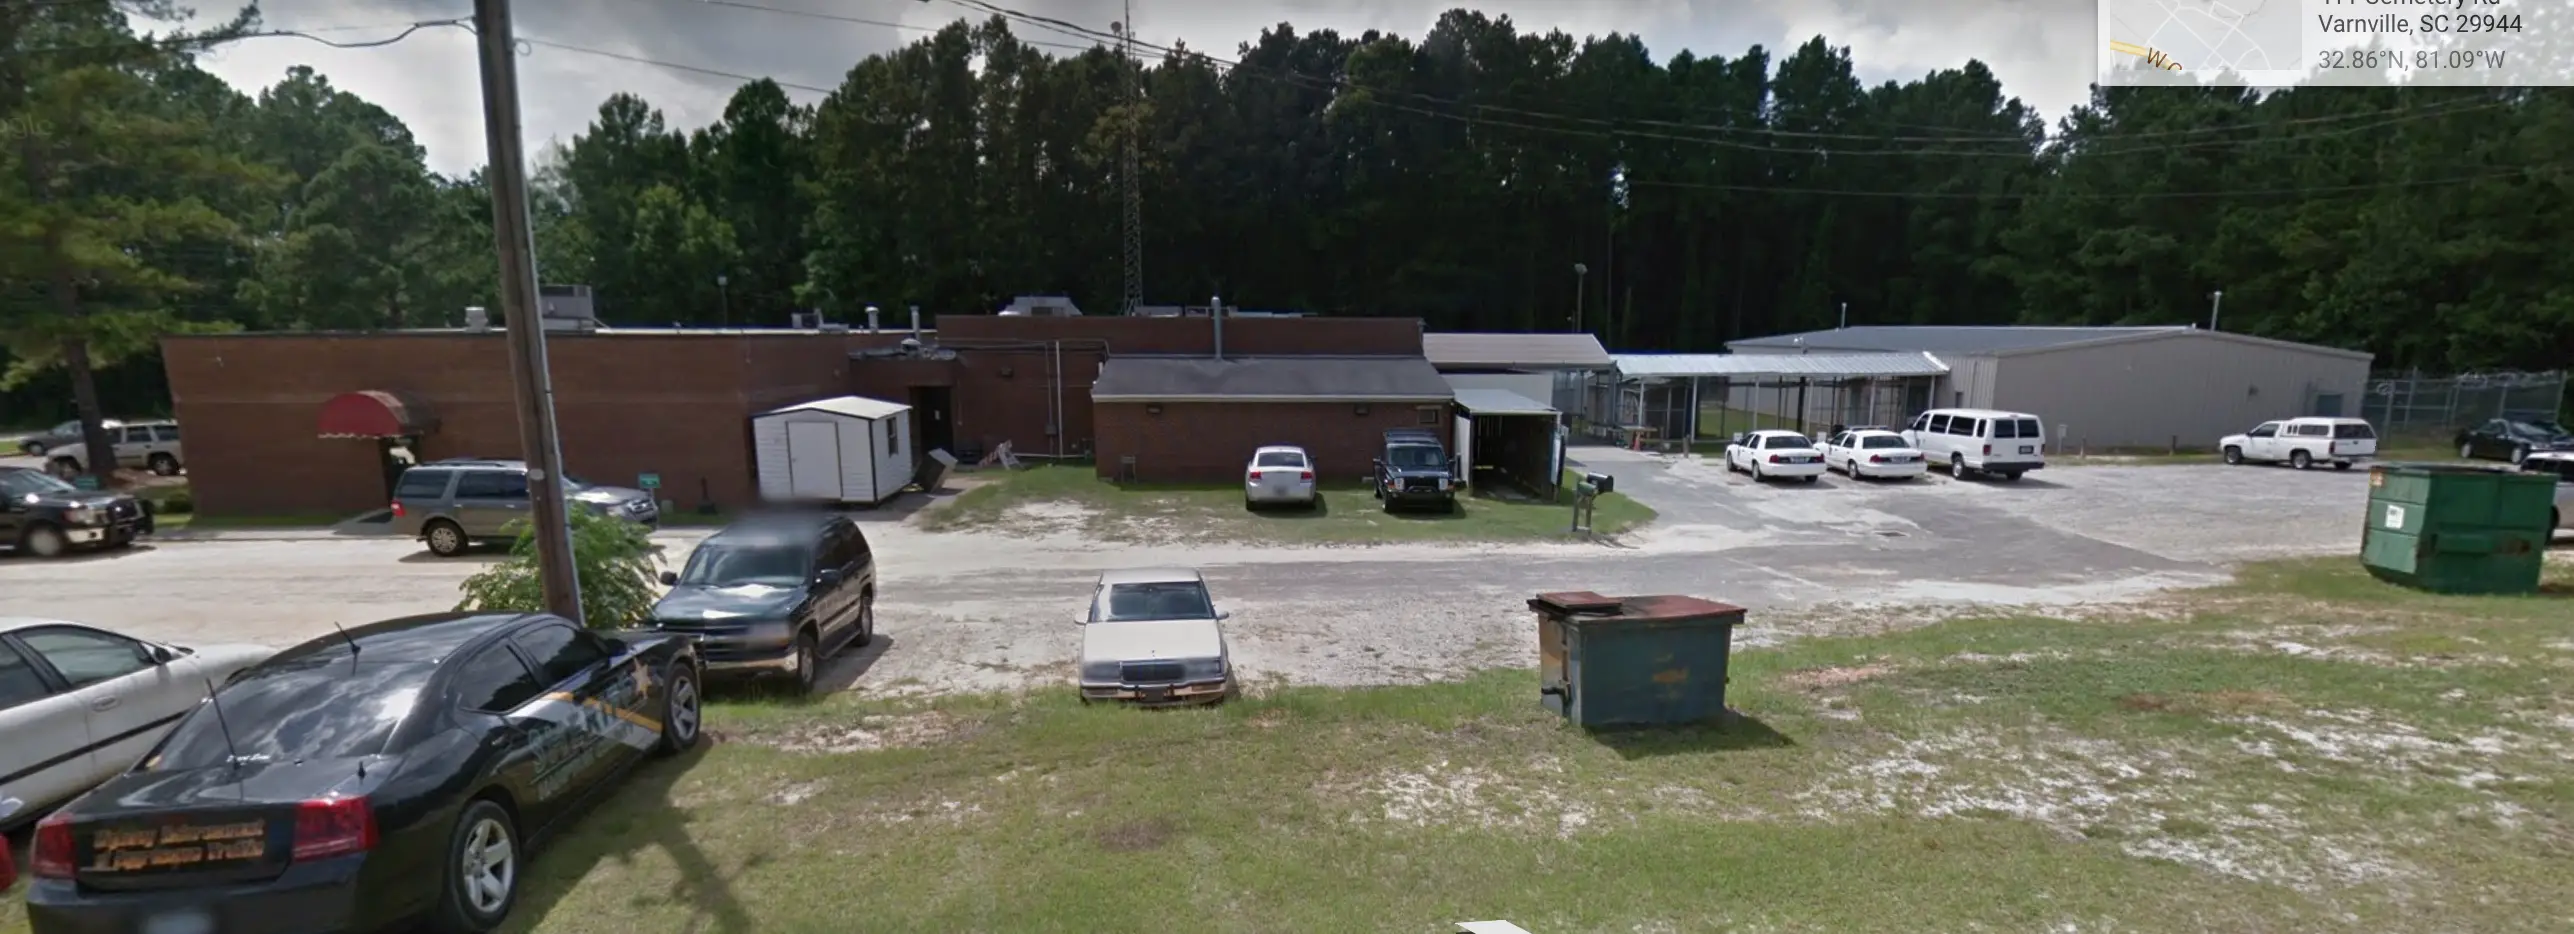 Hampton County Detention Center, Varnville, South Carolina